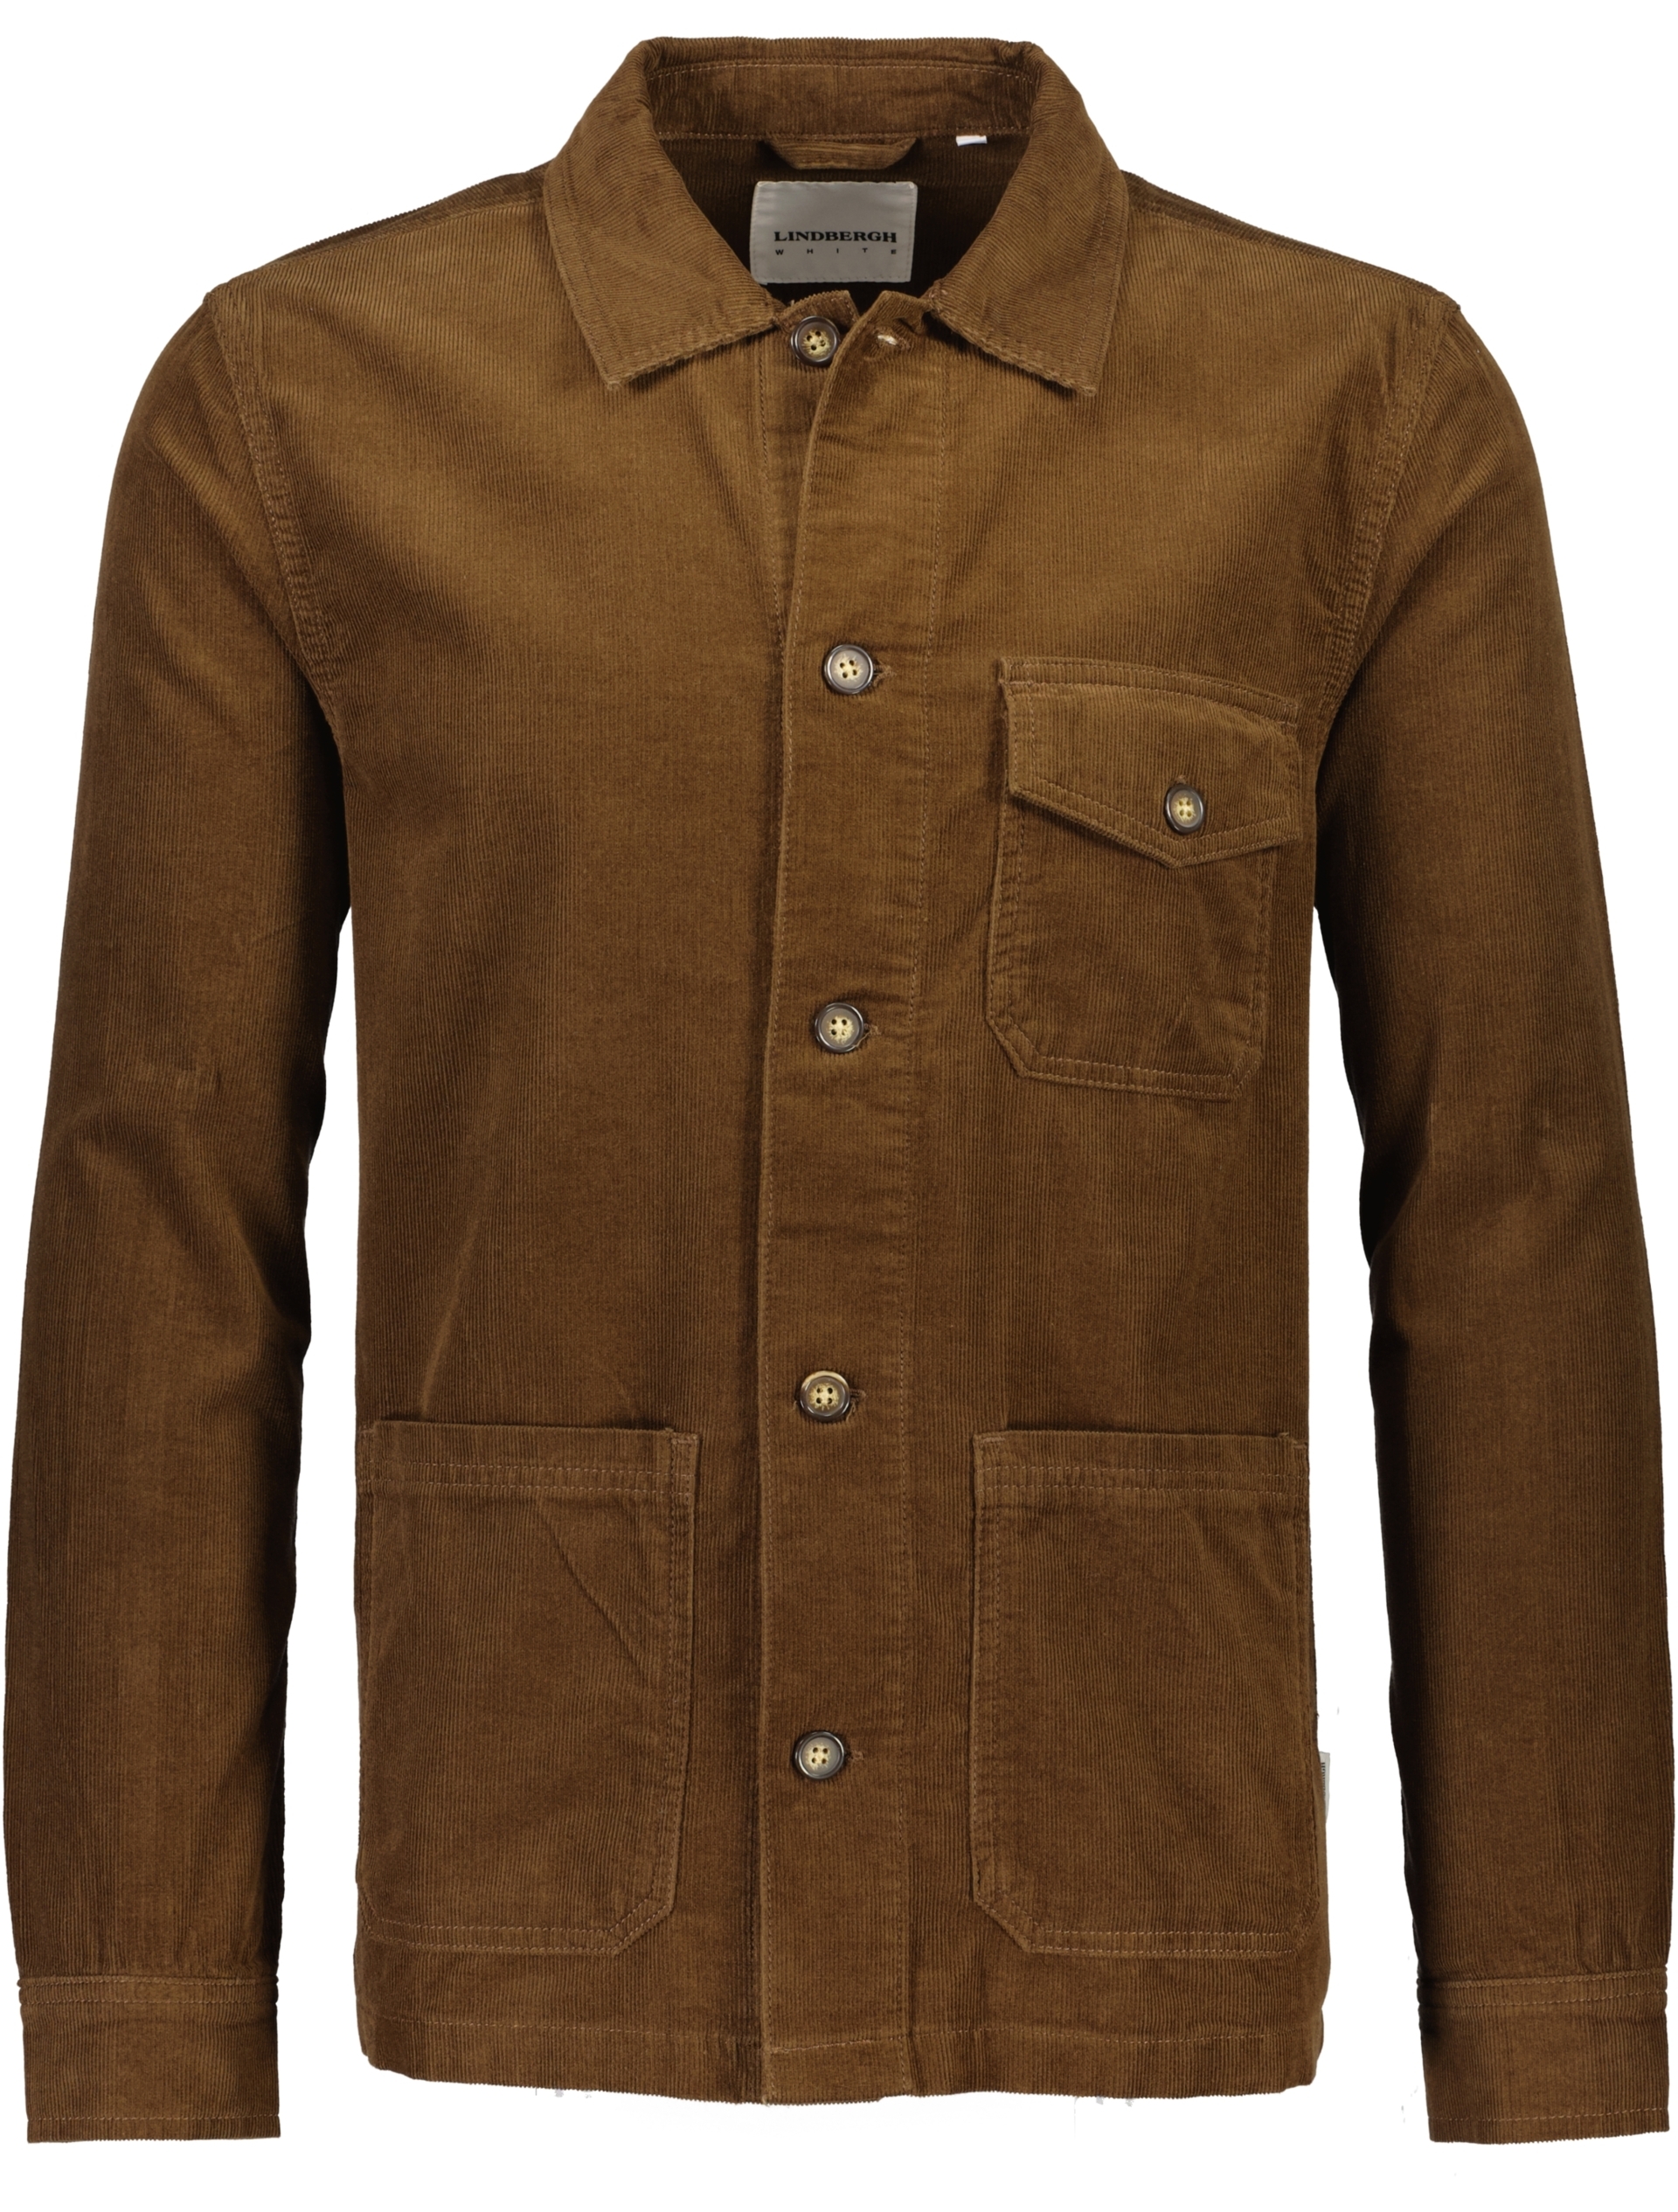 Lindbergh Corduroy shirt brown / brown